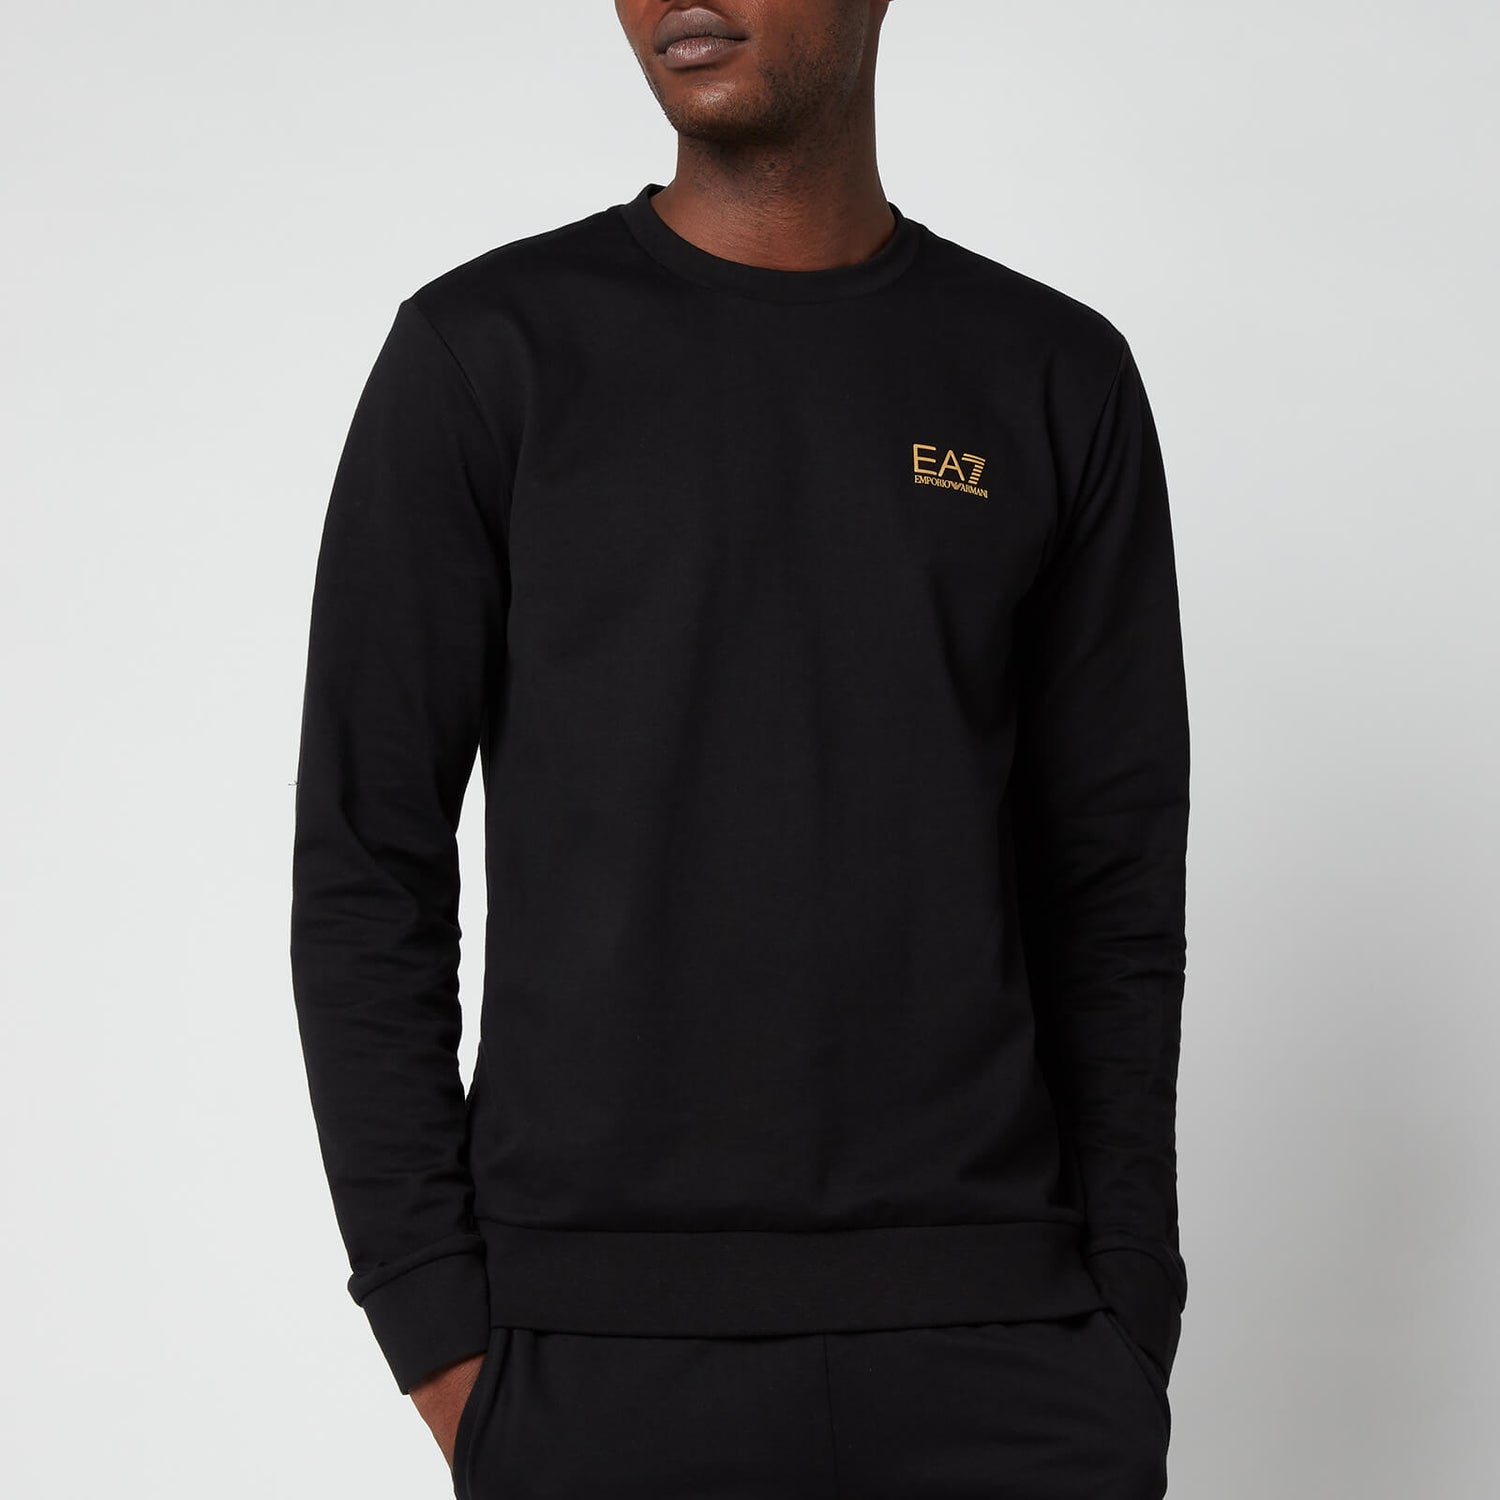 EA7 Men's Core Identity French Terry Sweatshirt - Black/Gold - S